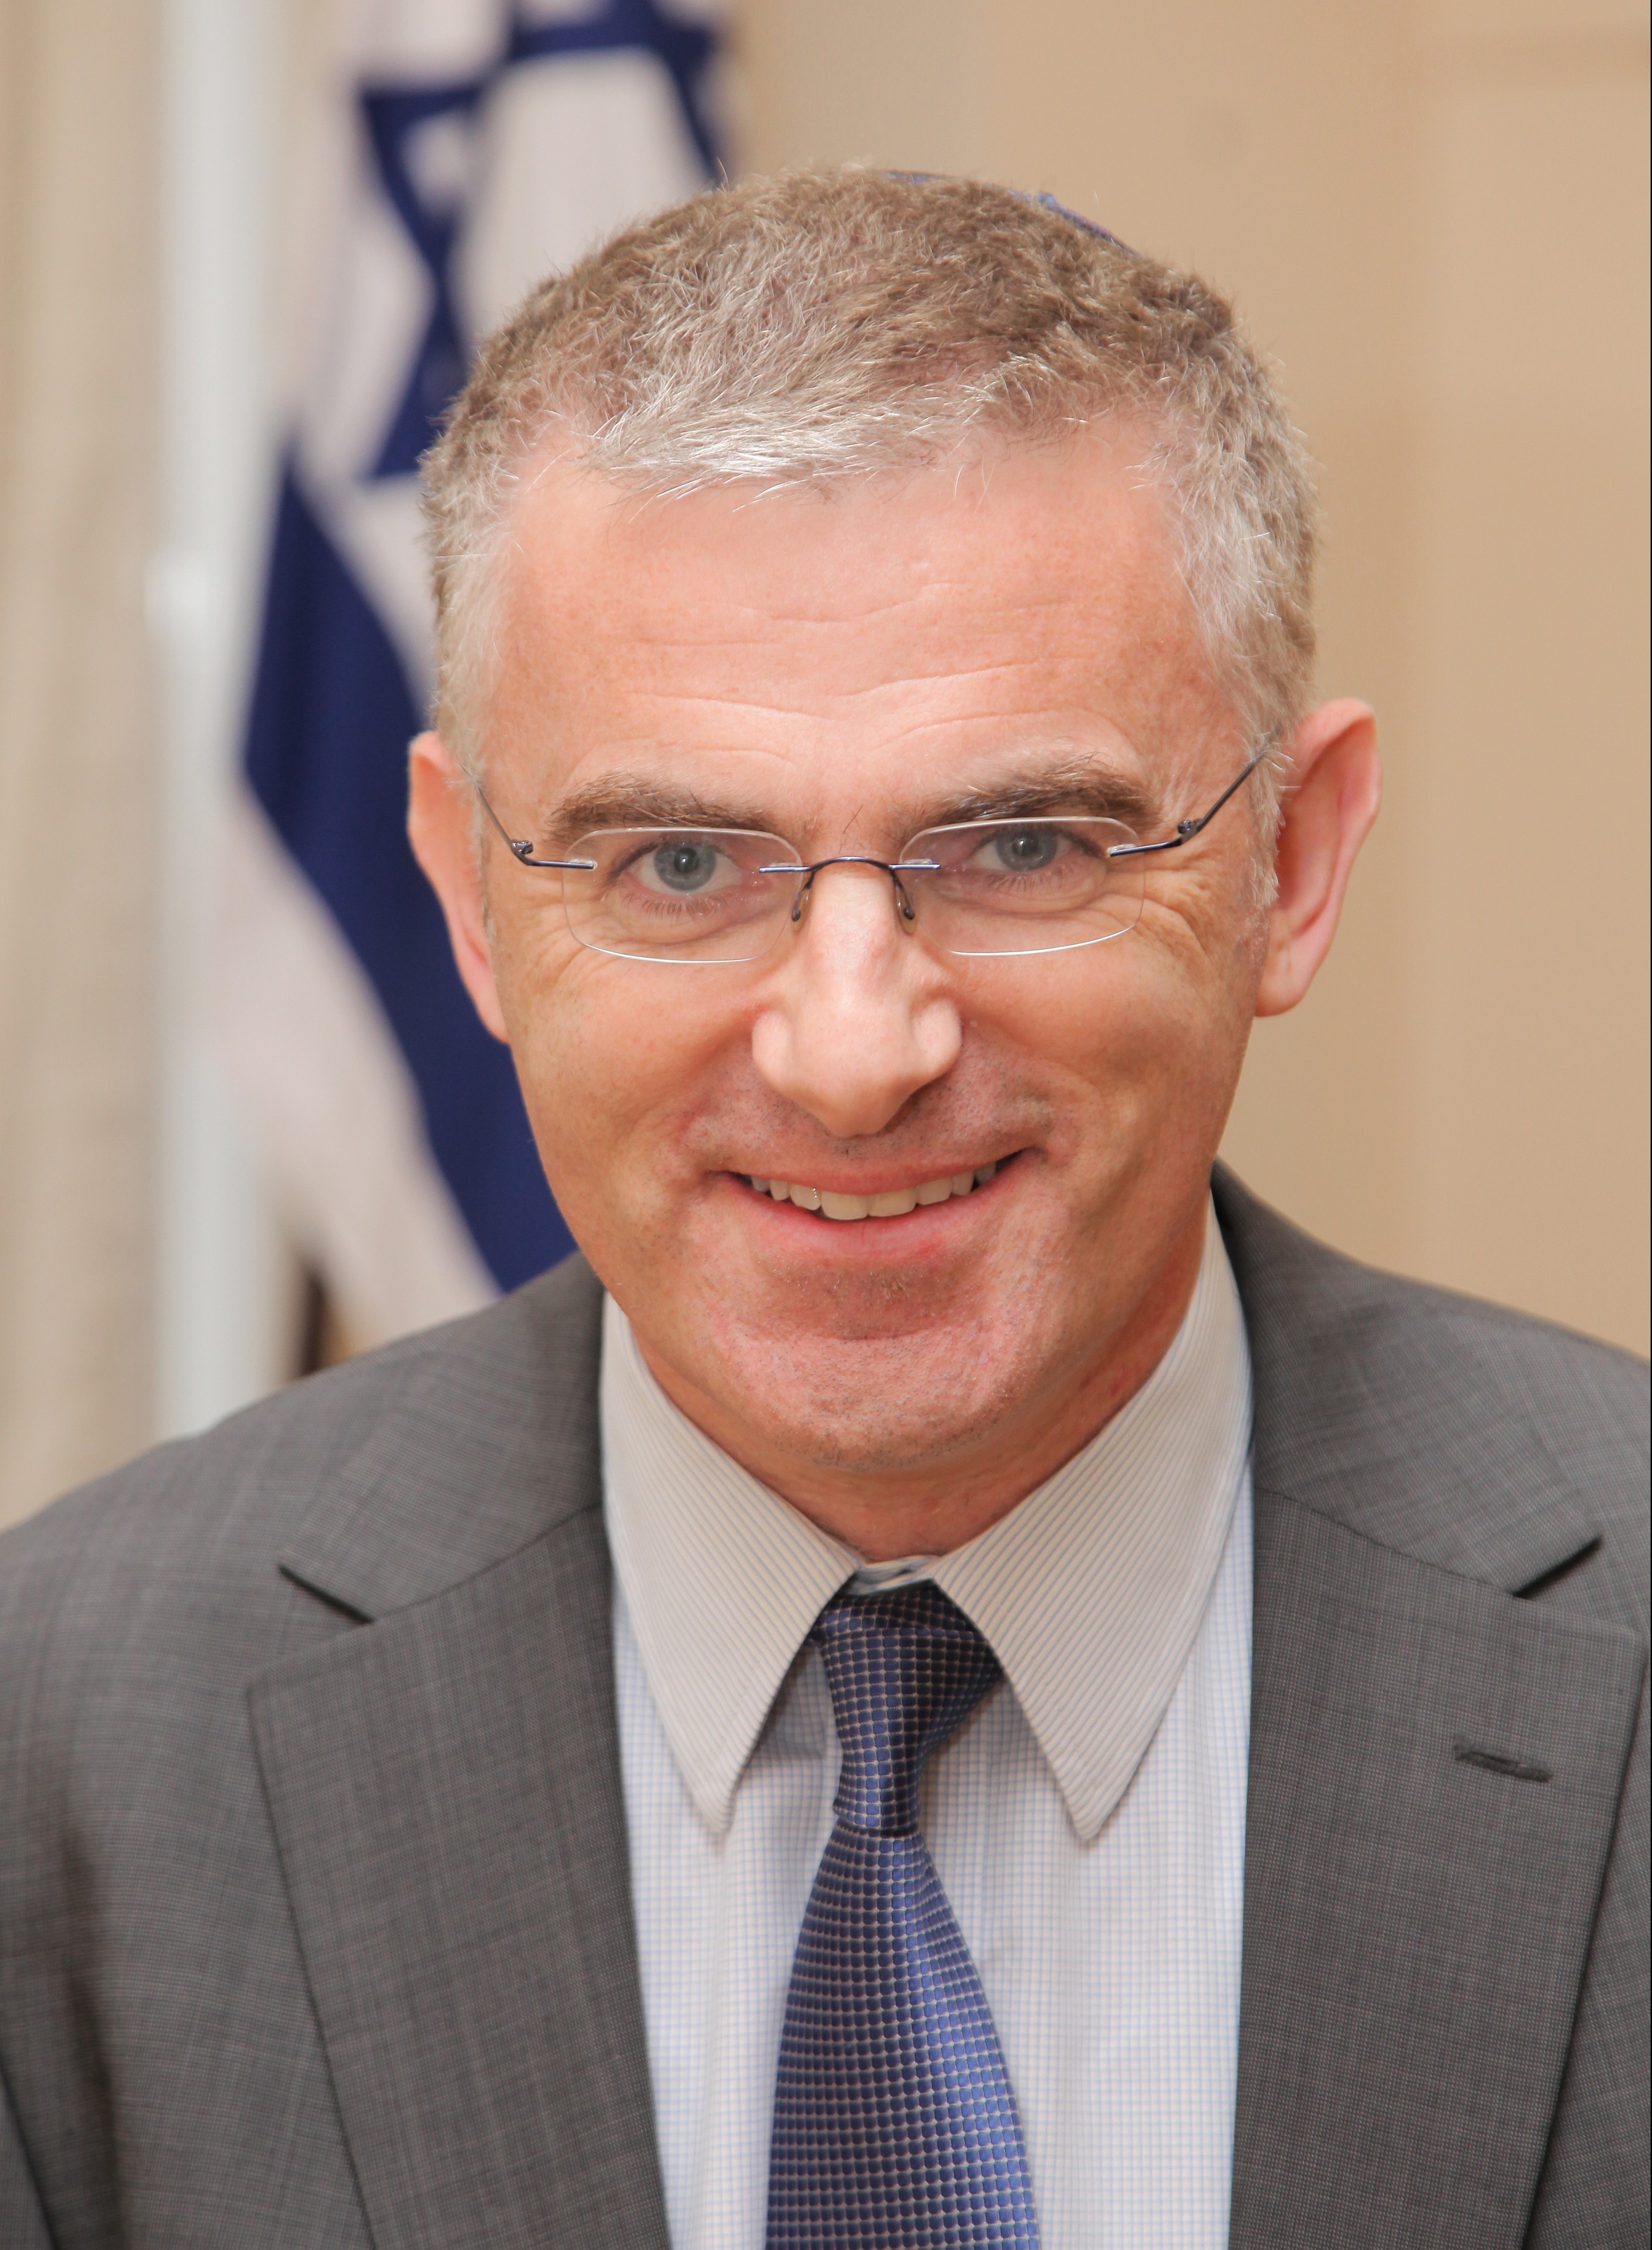 Daniel Taub, former Israeli Ambassador to the UK